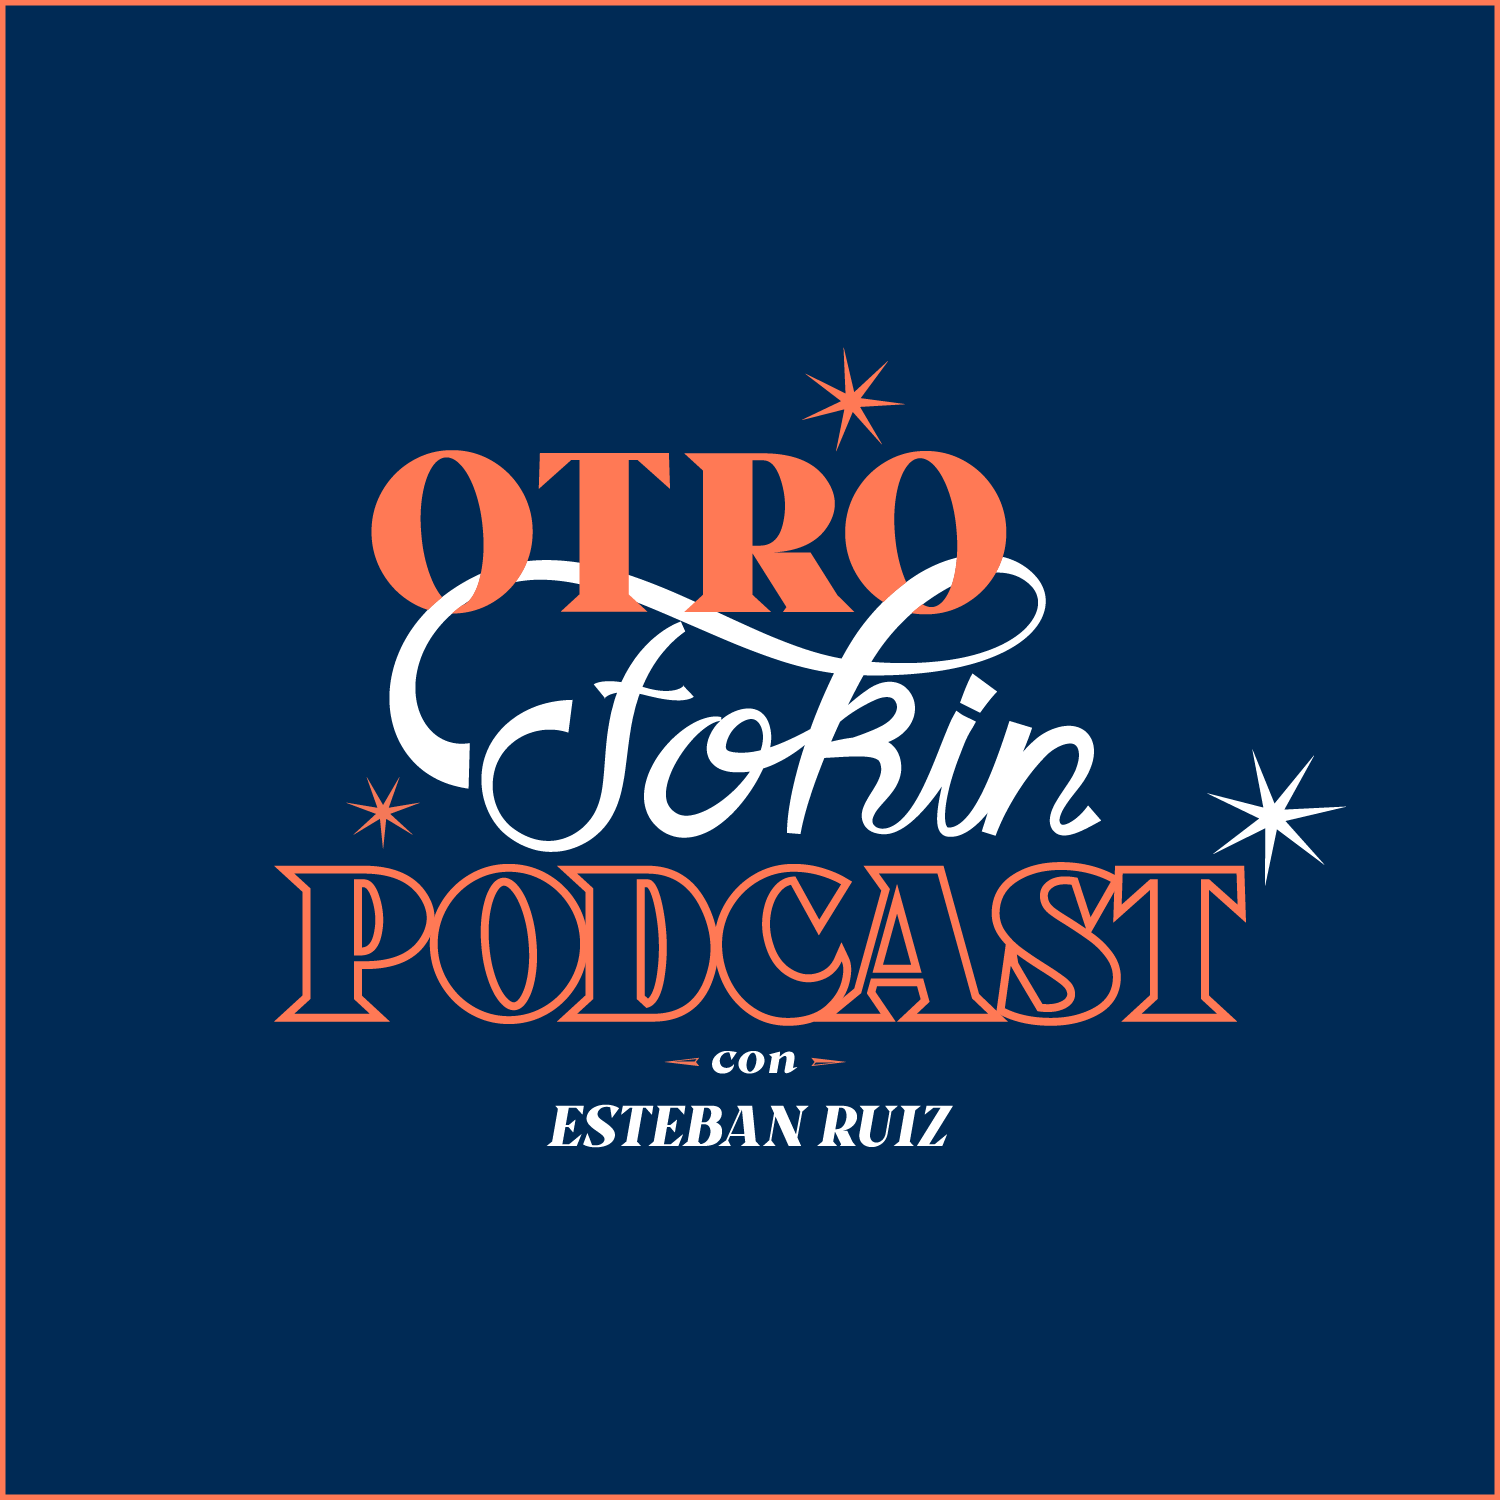 Artwork for podcast Otro Fokin Podcast